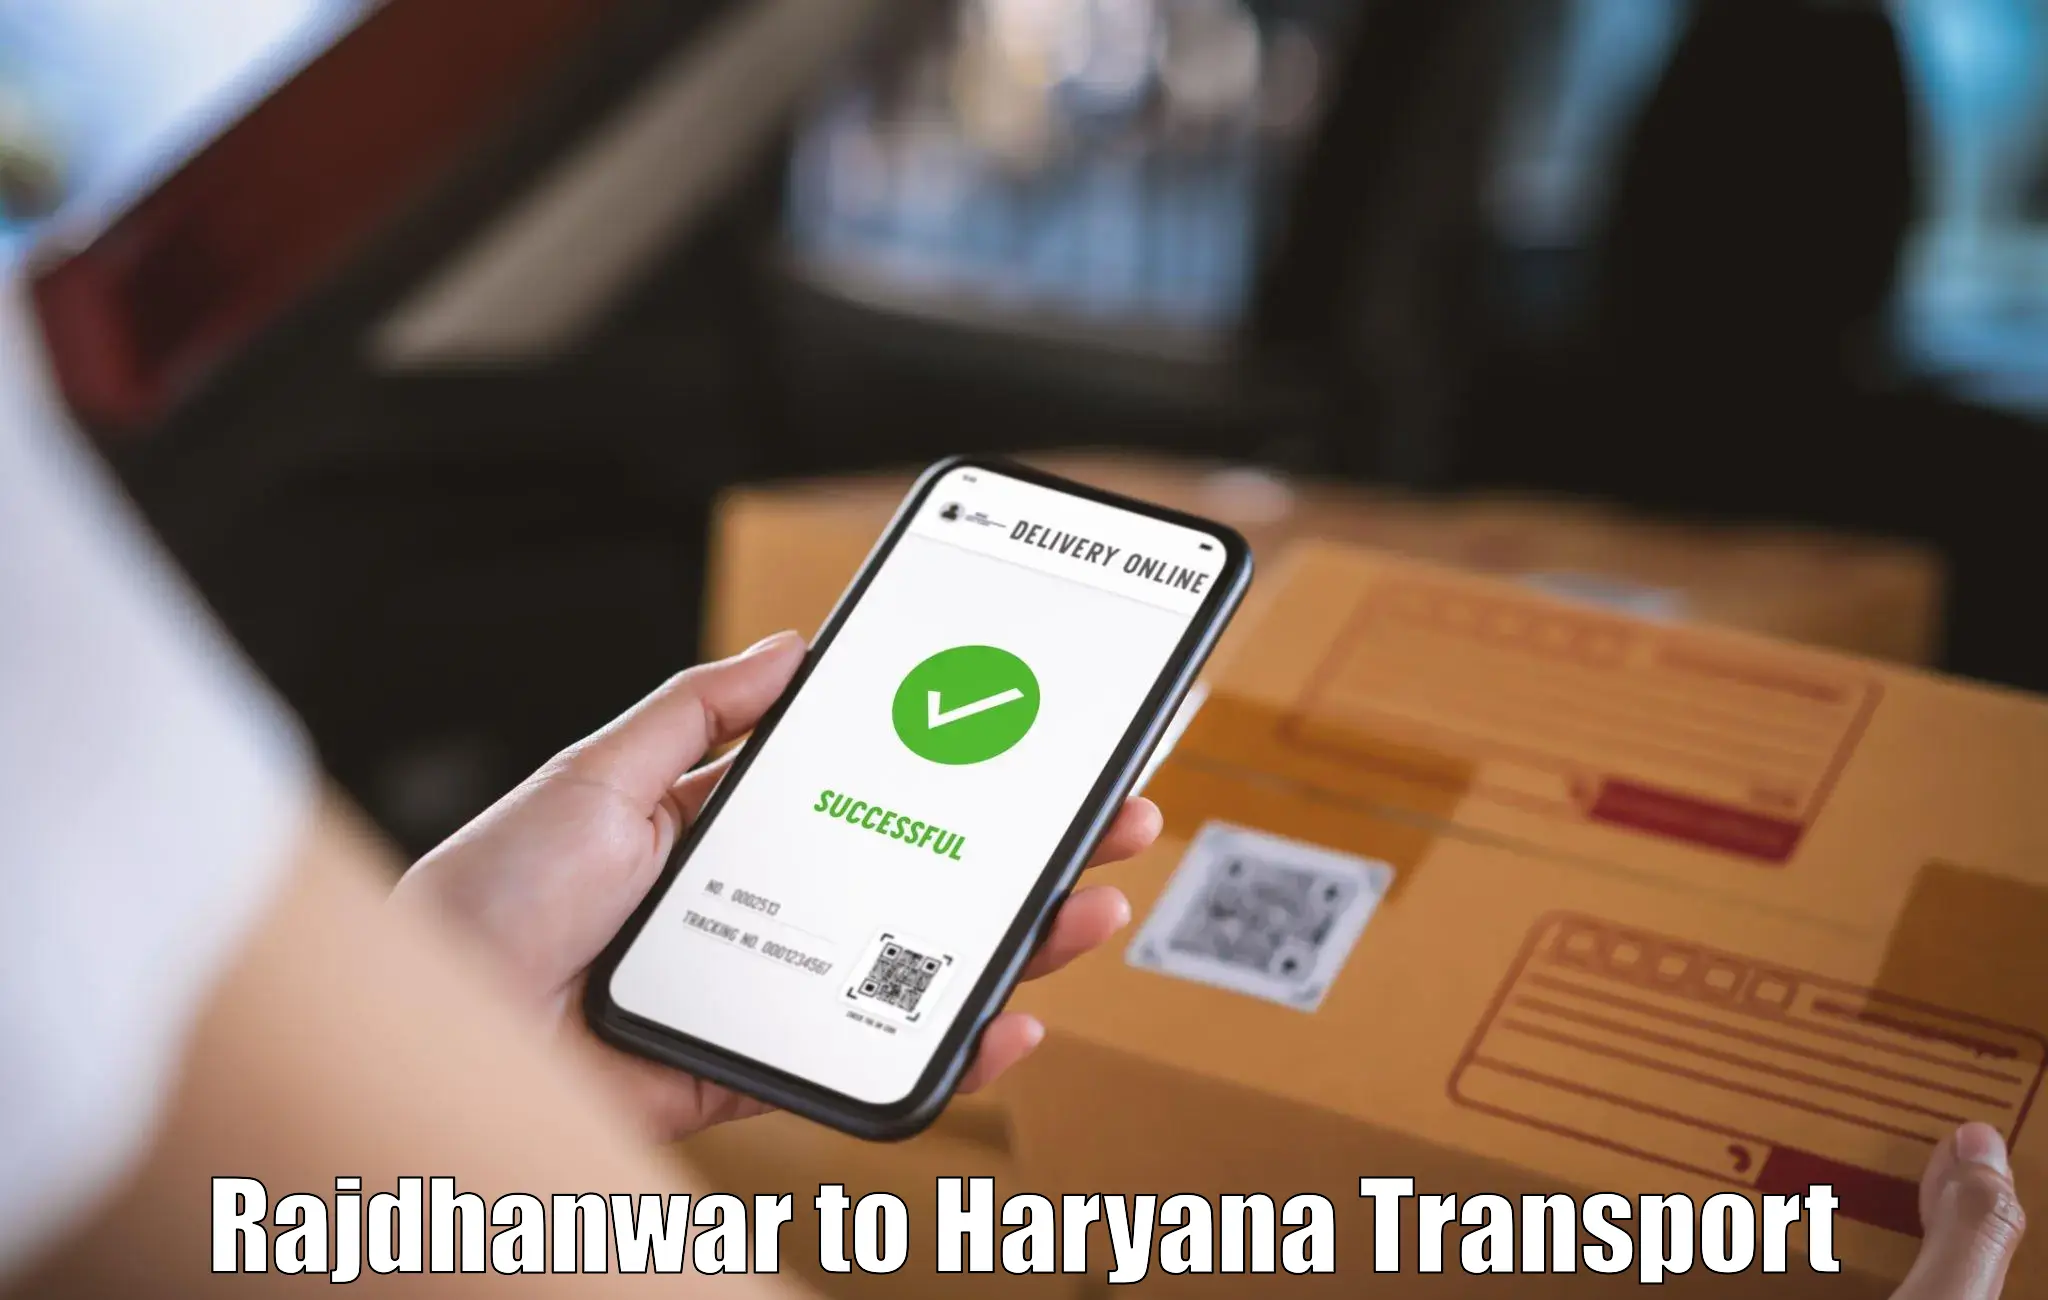 Transport in sharing Rajdhanwar to Bilaspur Haryana